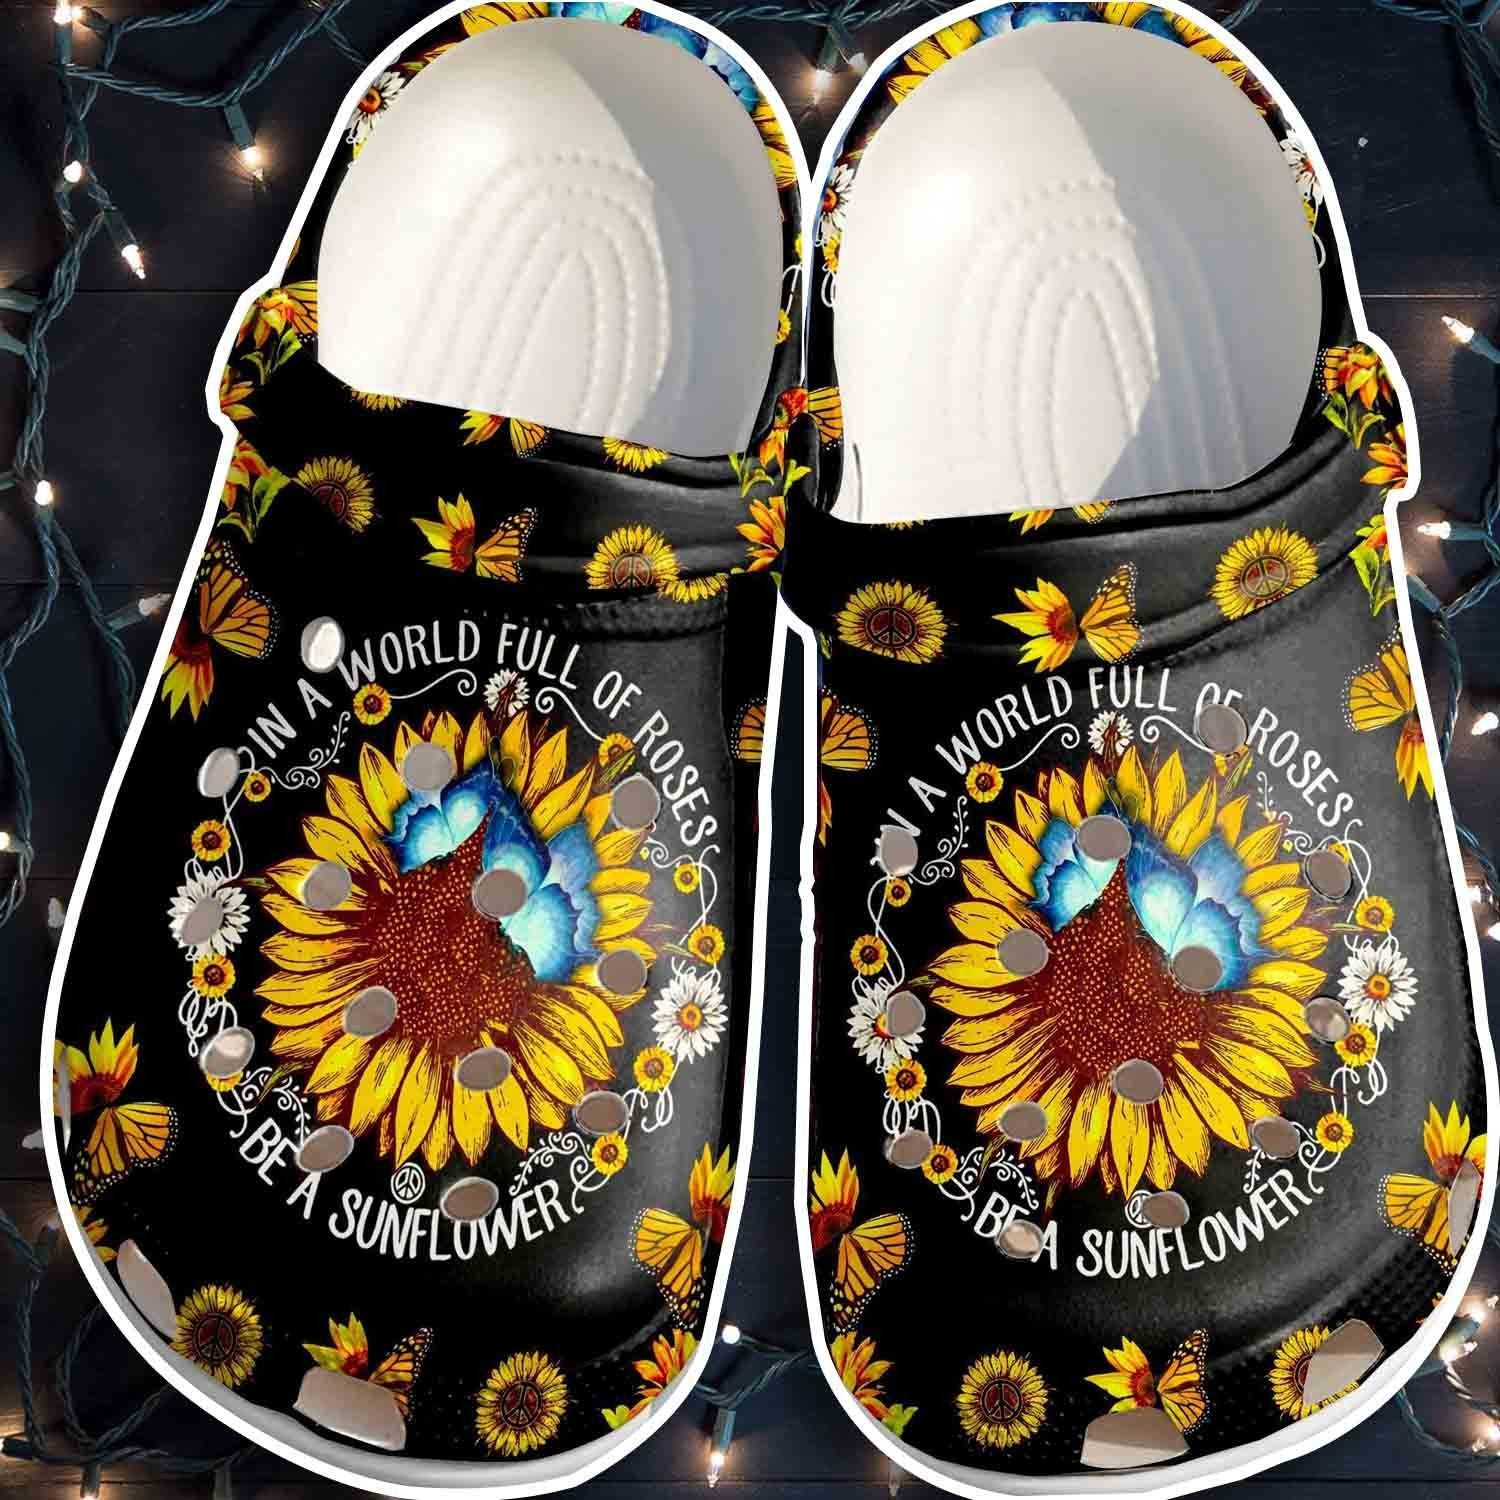 Sunflower Butterfly Hippie Crocs Shoes